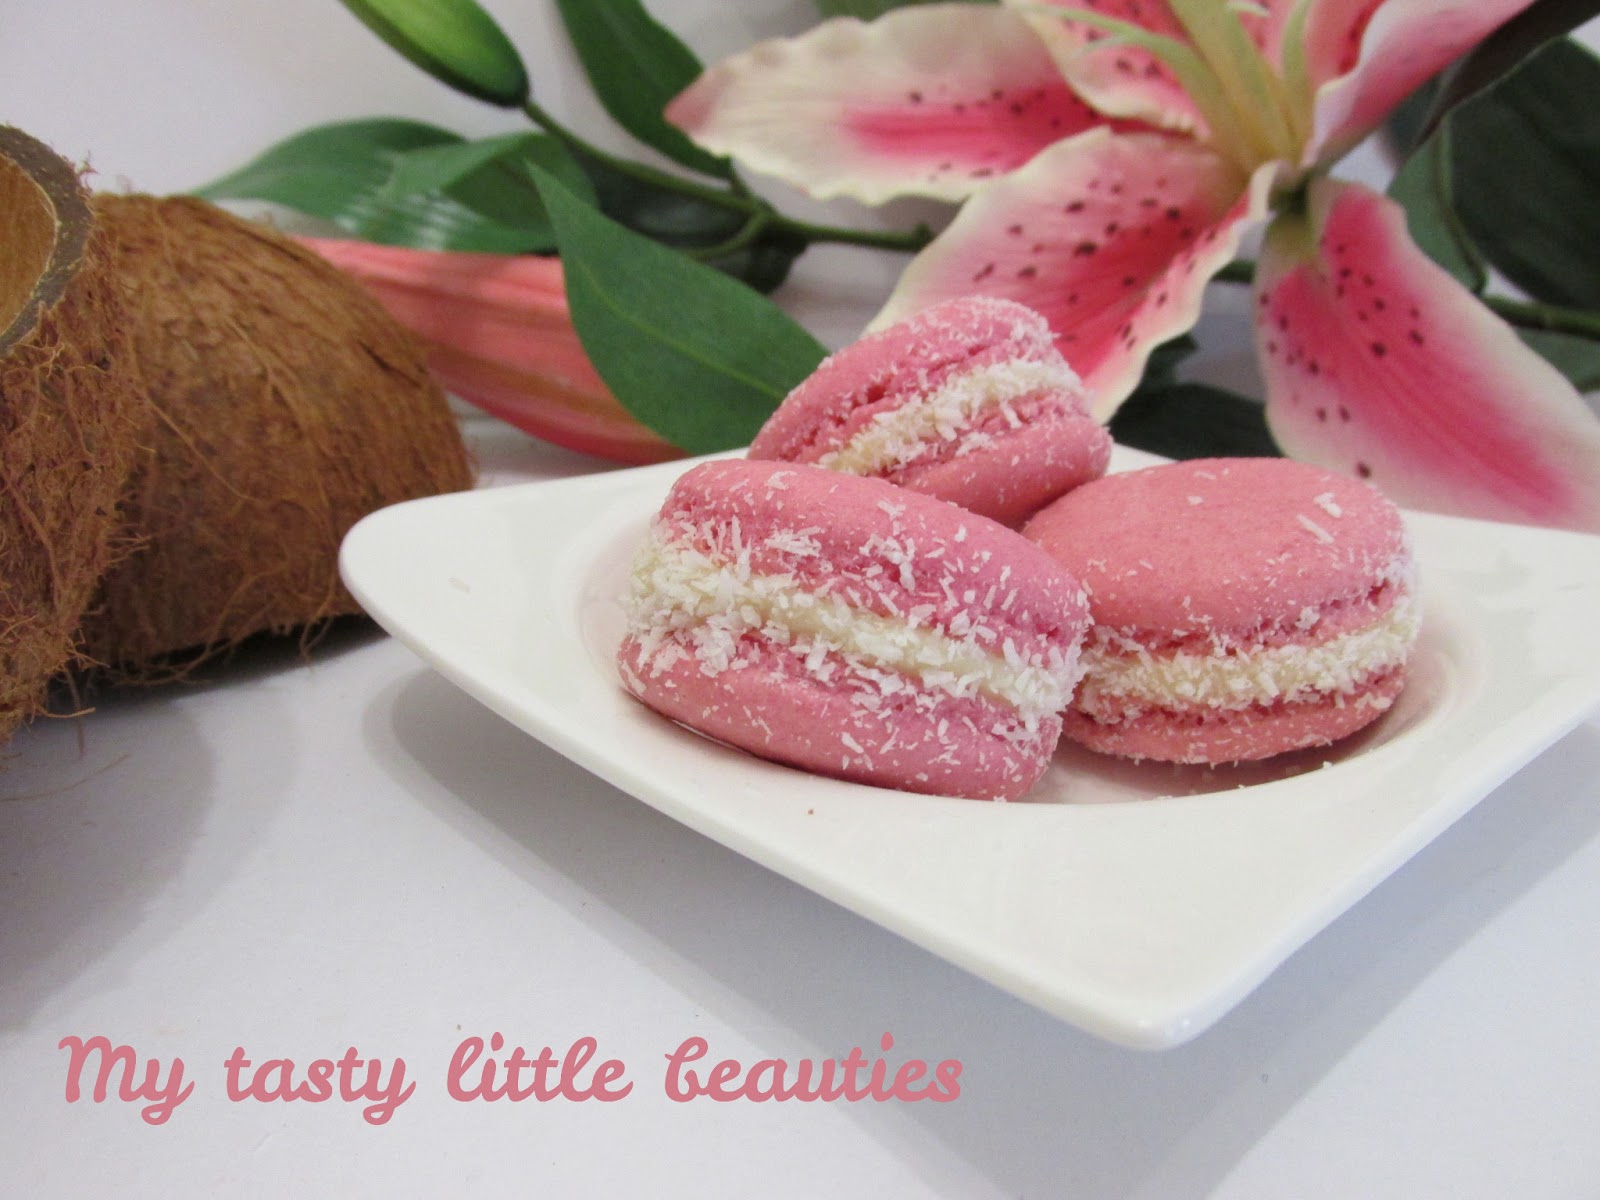 My tasty little beauties - Kuchen geht immer!: Karibische Kokos-Macarons